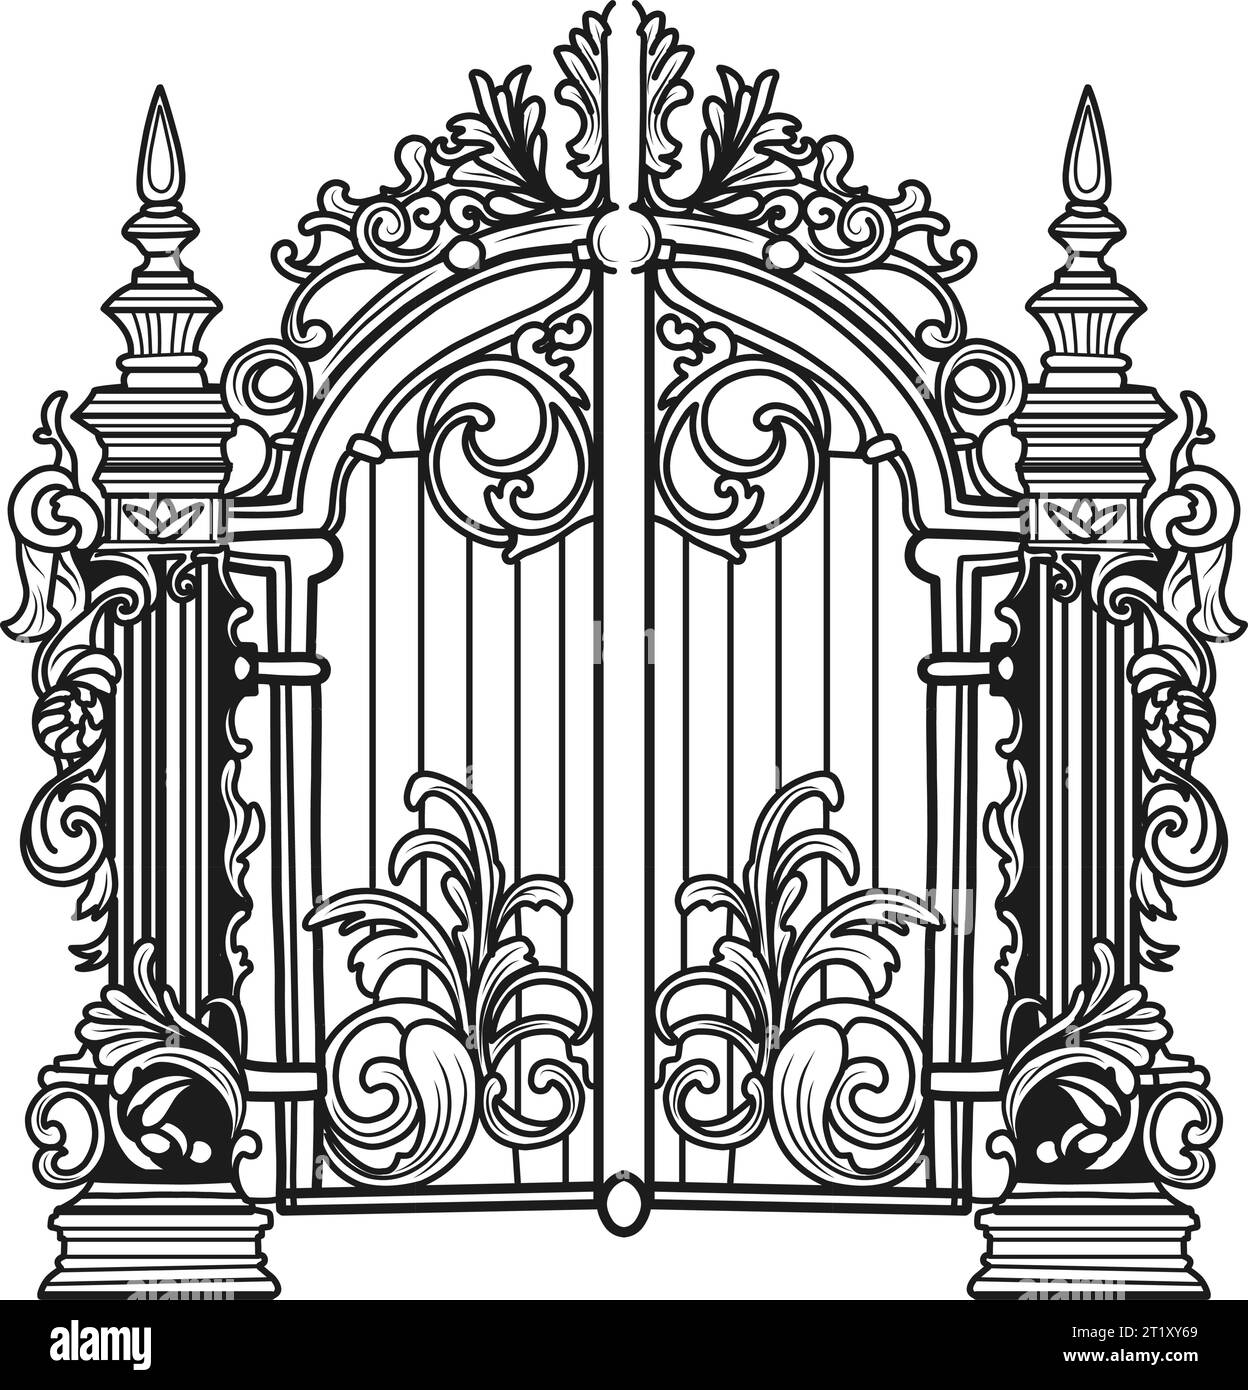 Design drawing of metal gates Stock Vector